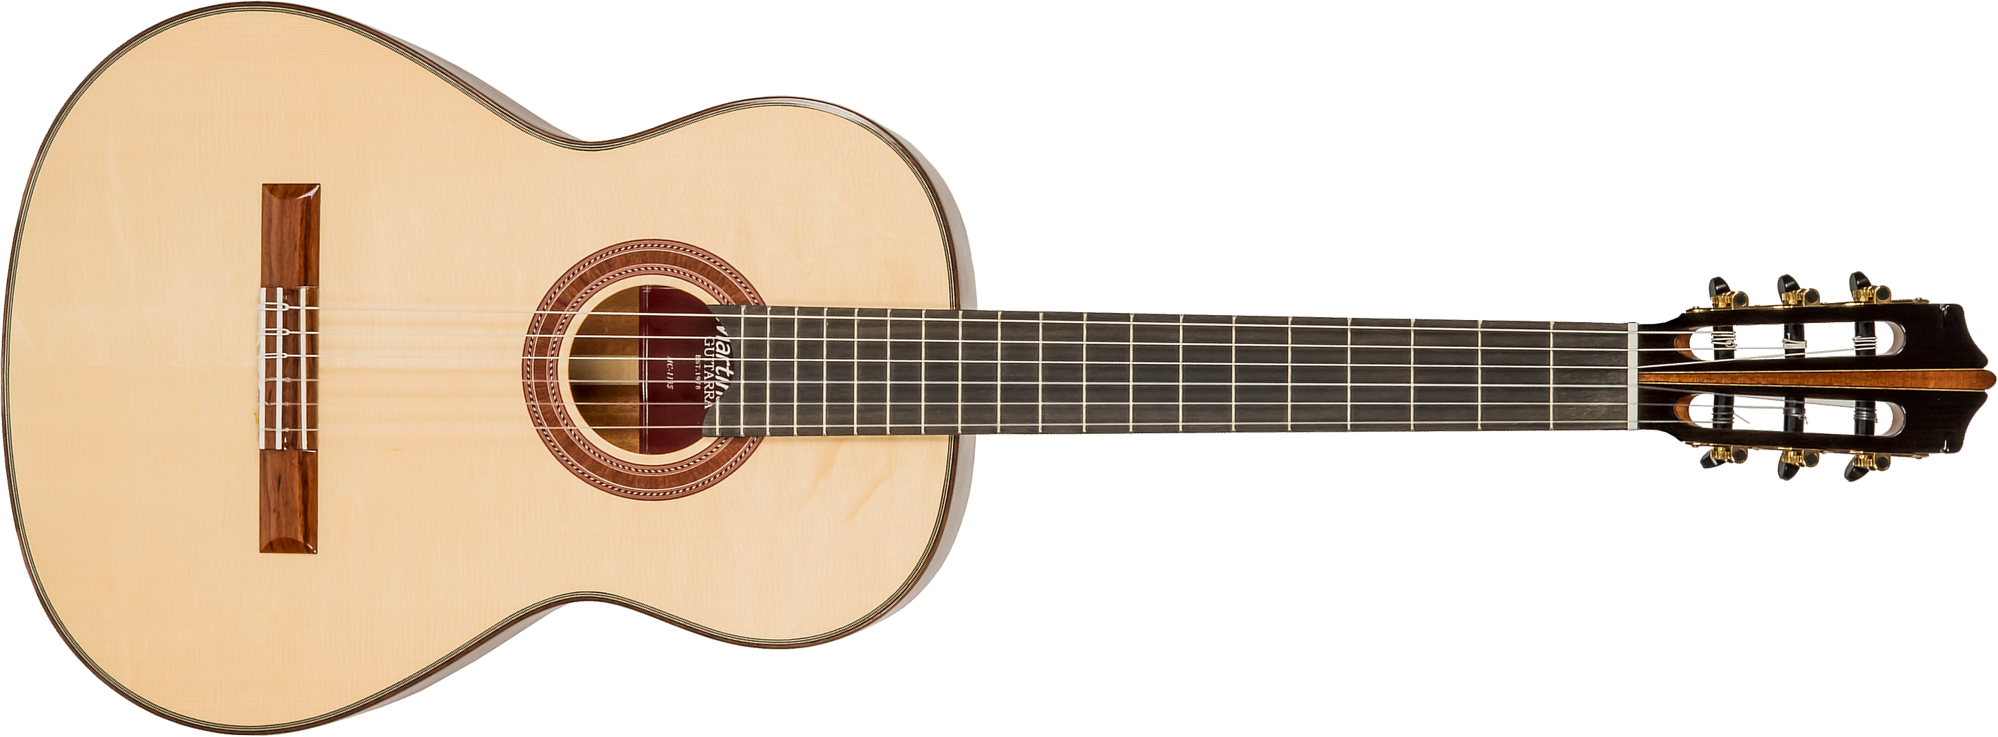 Martinez Mcg 118s Standard 4/4 Epicea Acajou Eb +housse - Natural - Classical guitar 4/4 size - Main picture